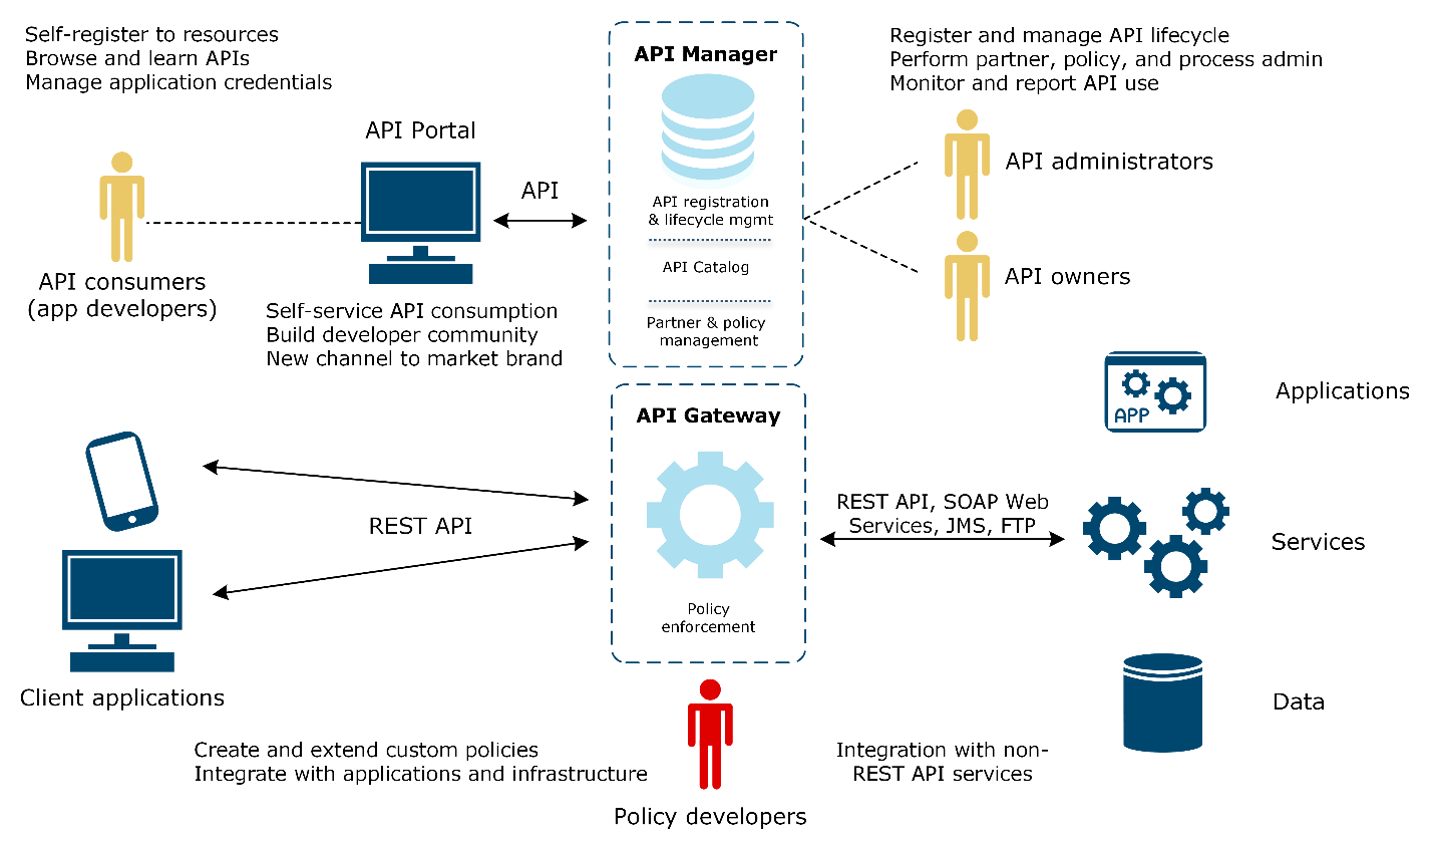 axway-api-management-architecture-deployment-developer-portal-part-4-f